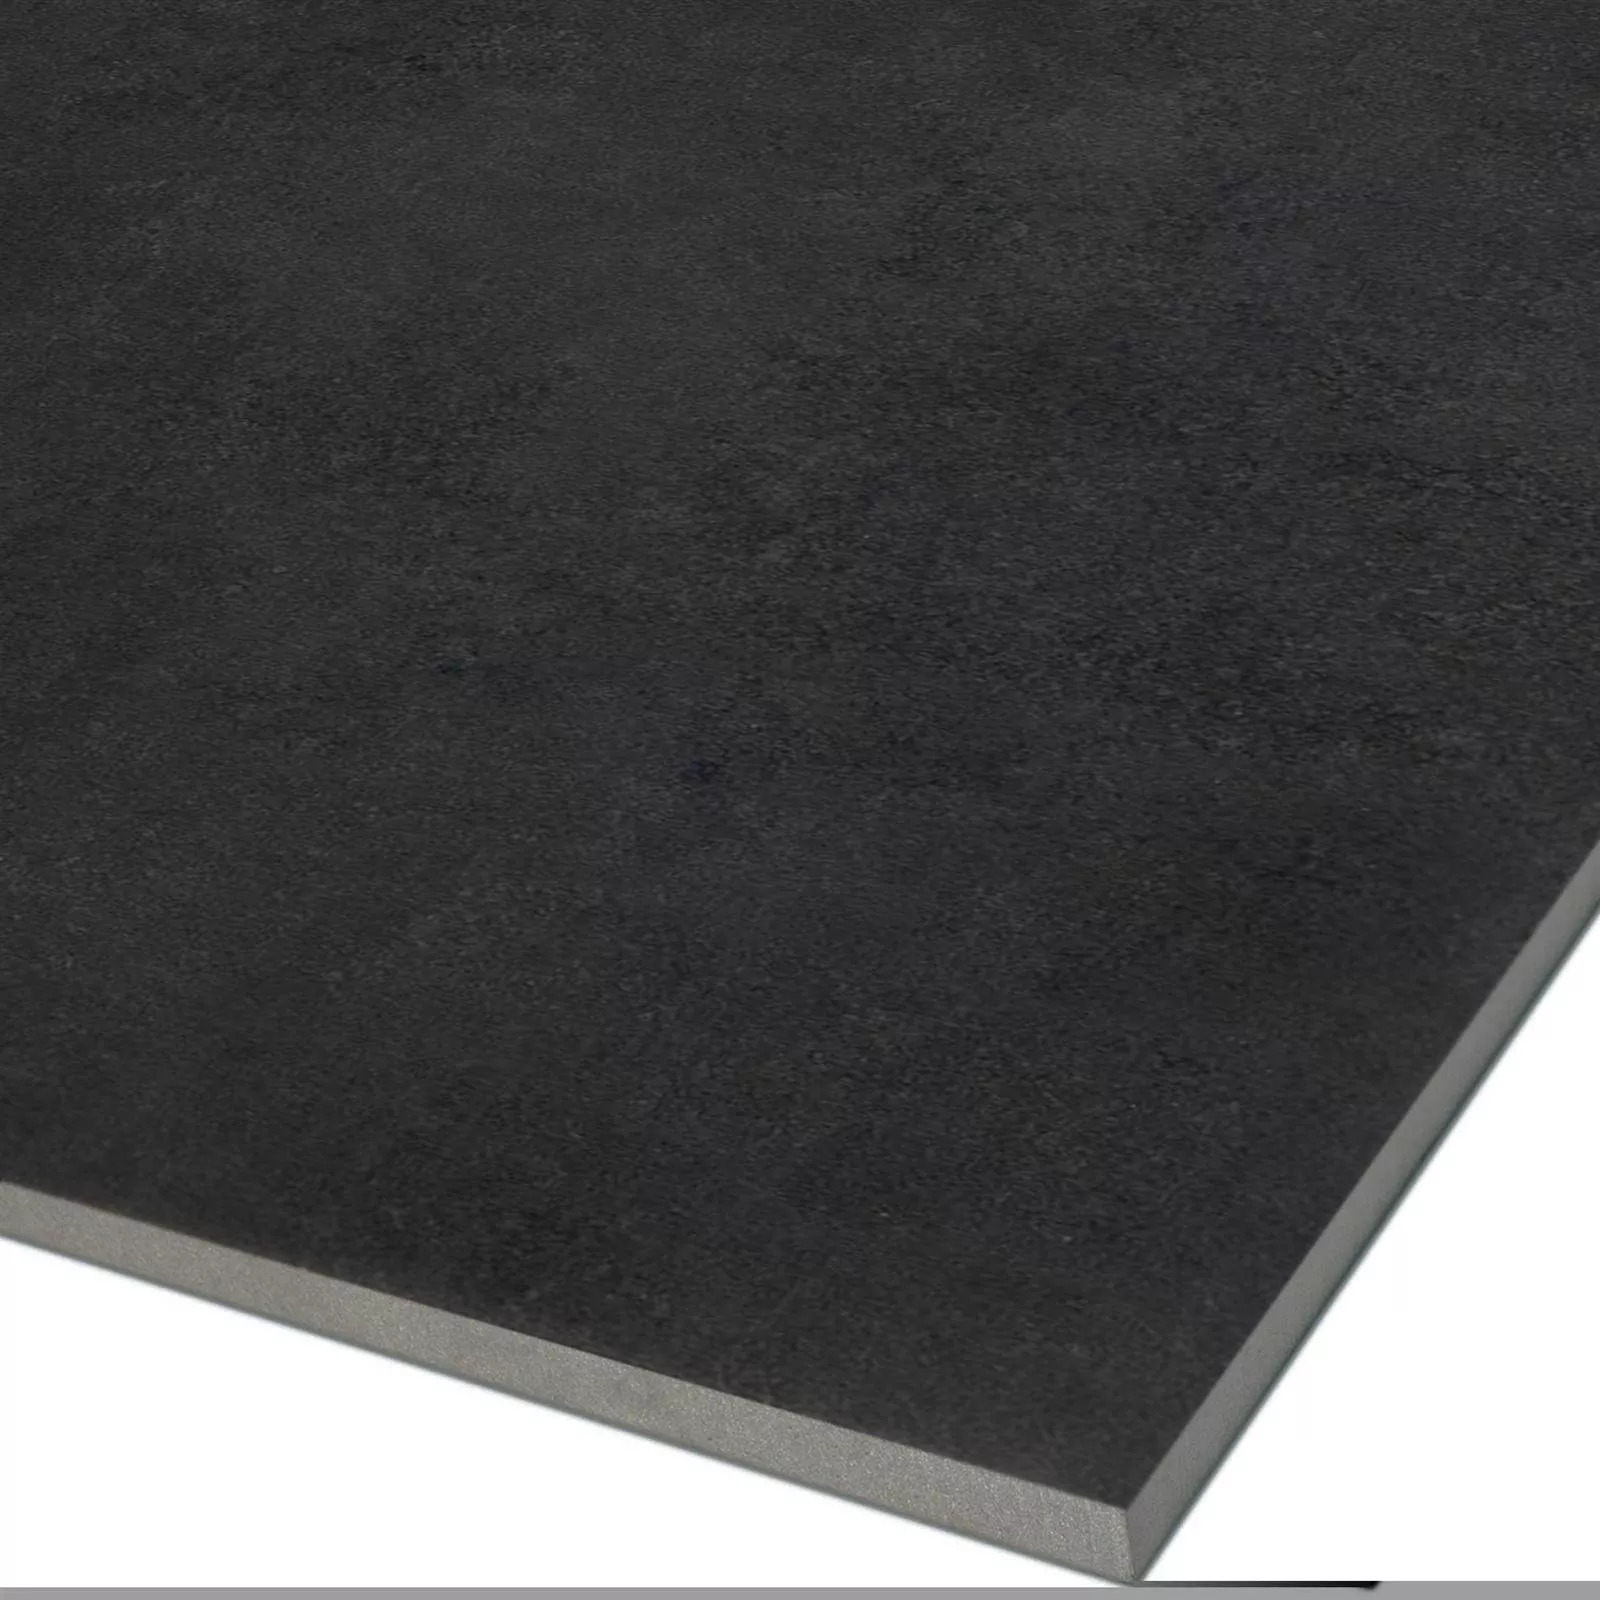 Sample Floor Tiles Mainland Beton Optic Polished 60x60cm Black